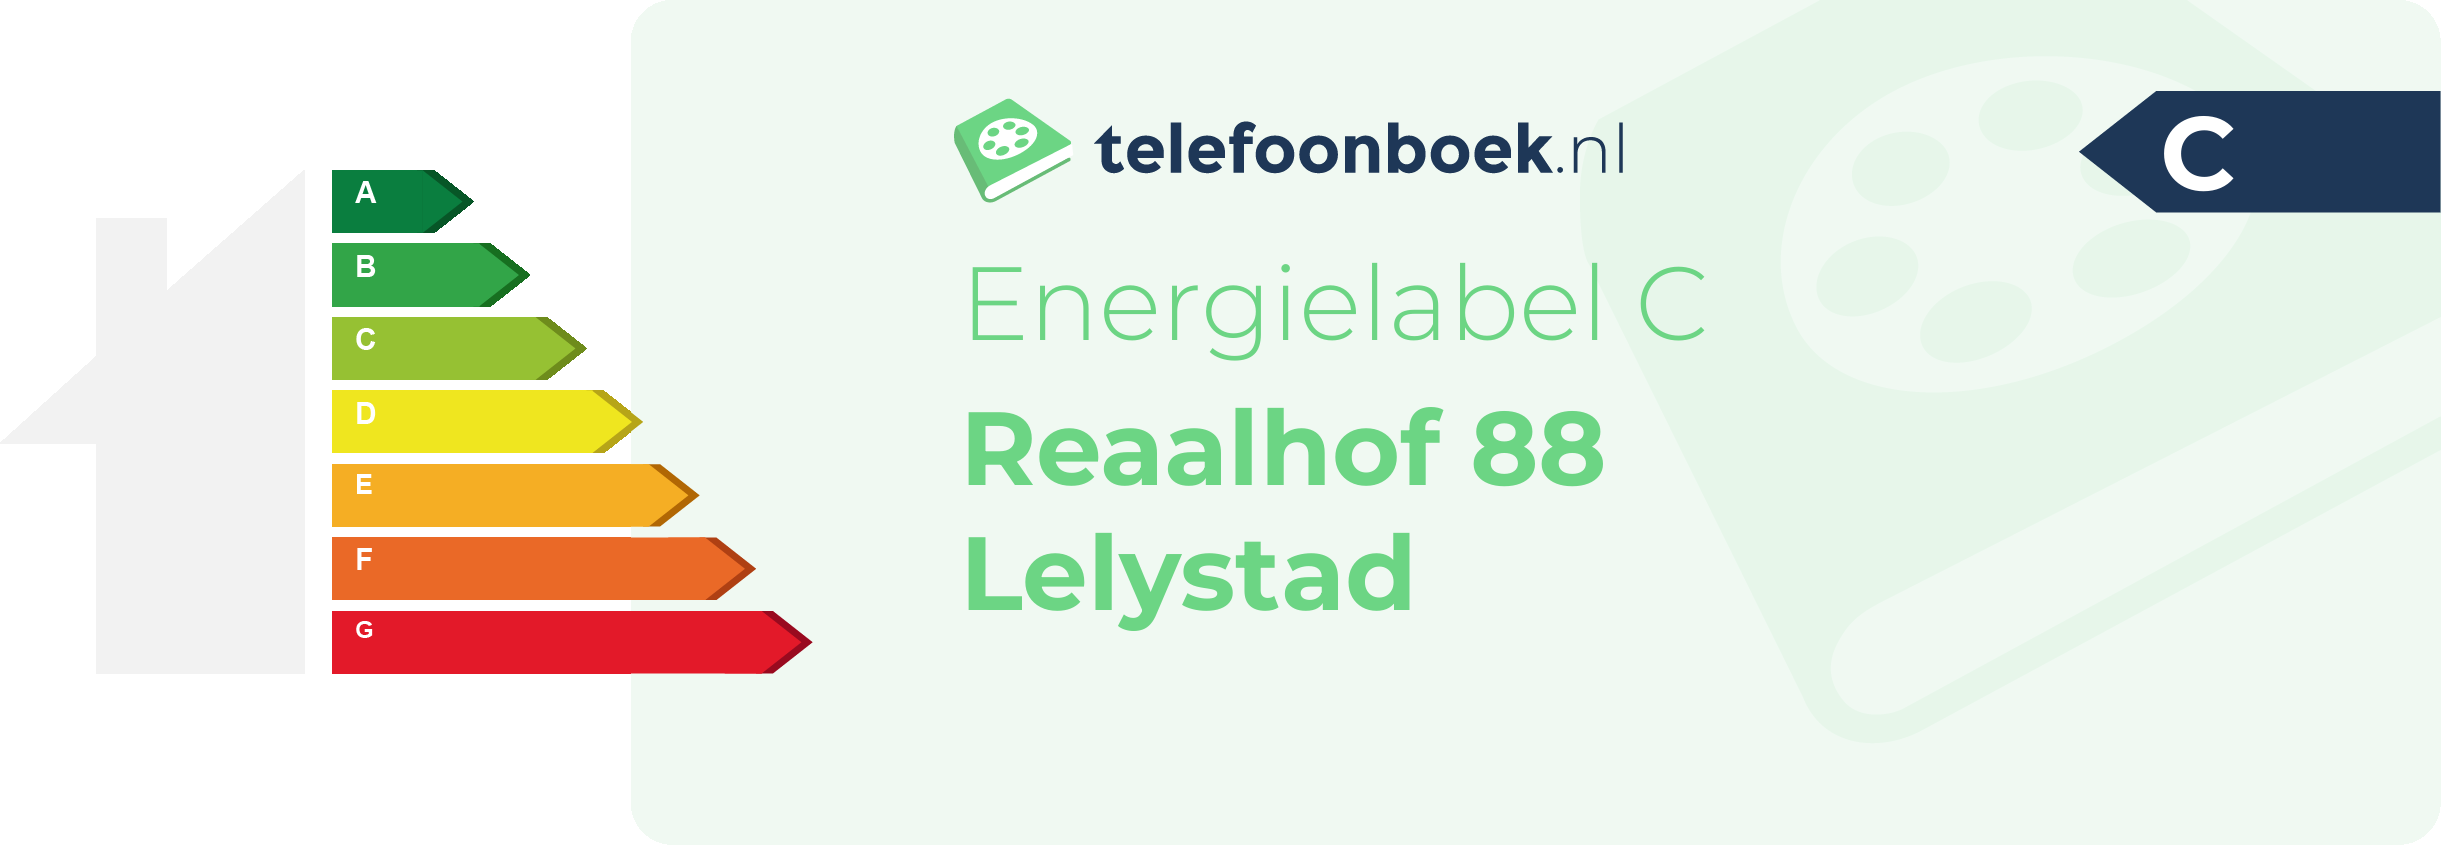 Energielabel Reaalhof 88 Lelystad